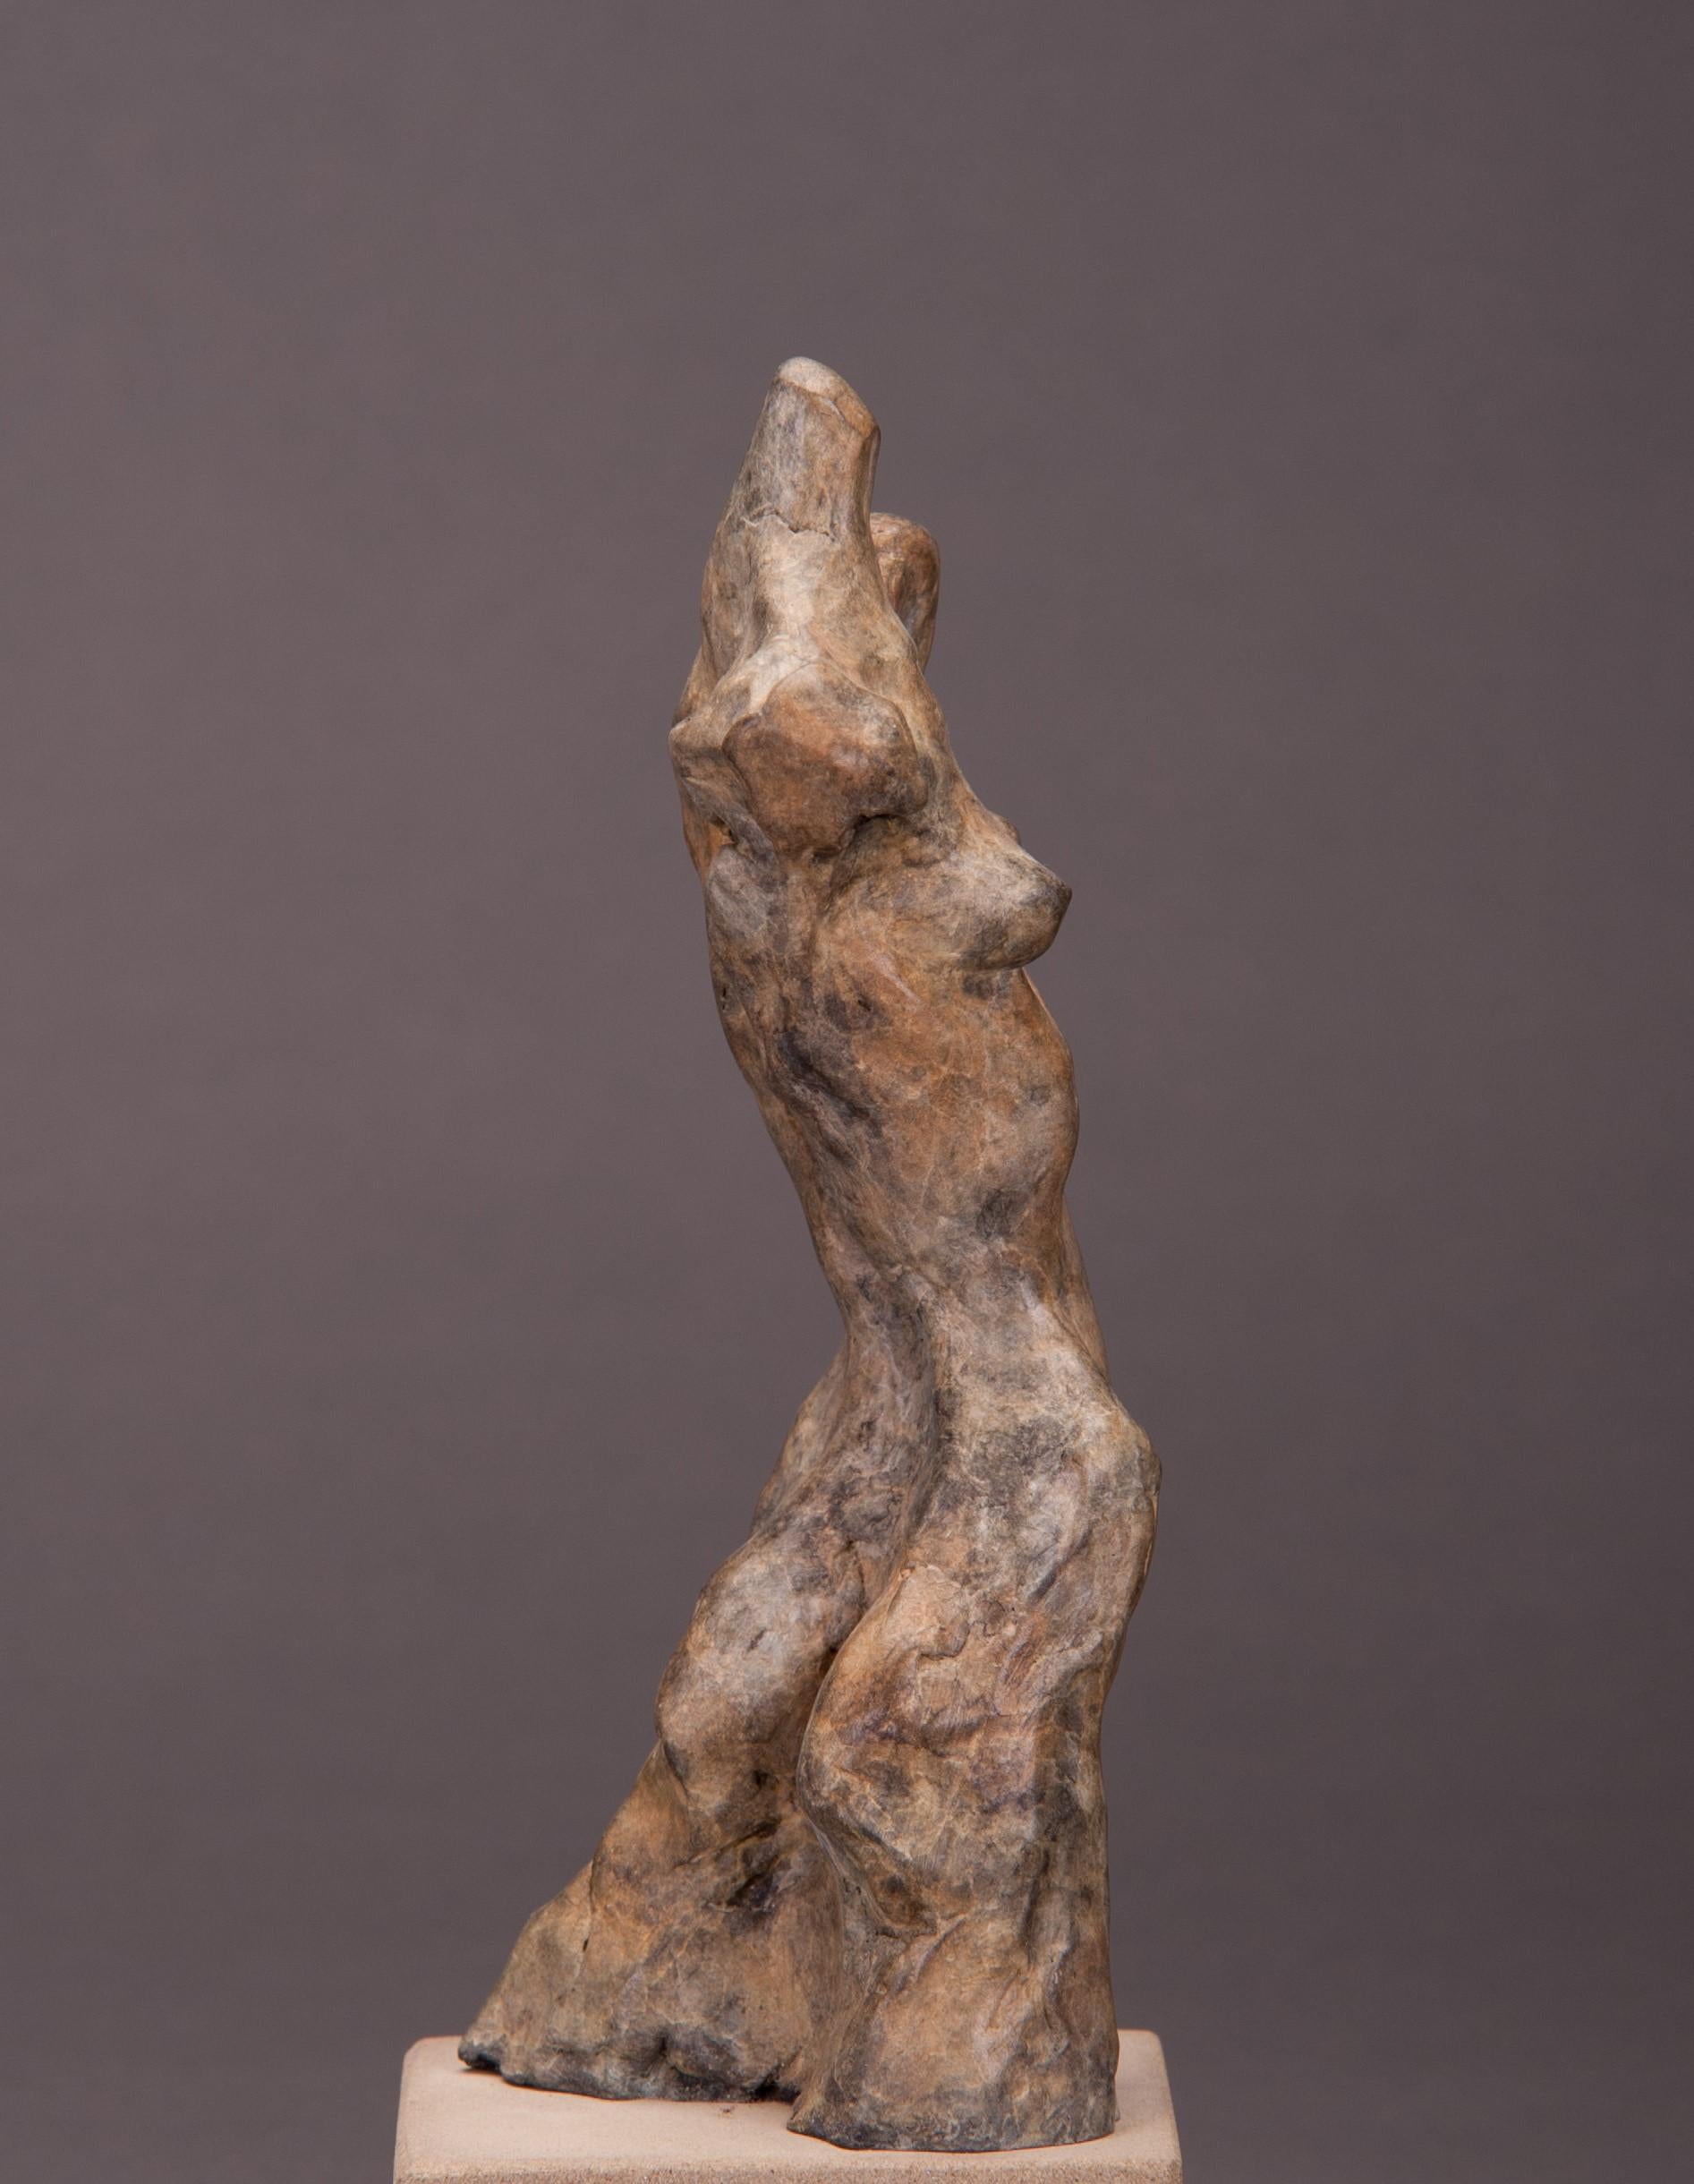 Venus - bronze cast sculpture limted edition original figure abstract human form - Sculpture by Nicola Godden